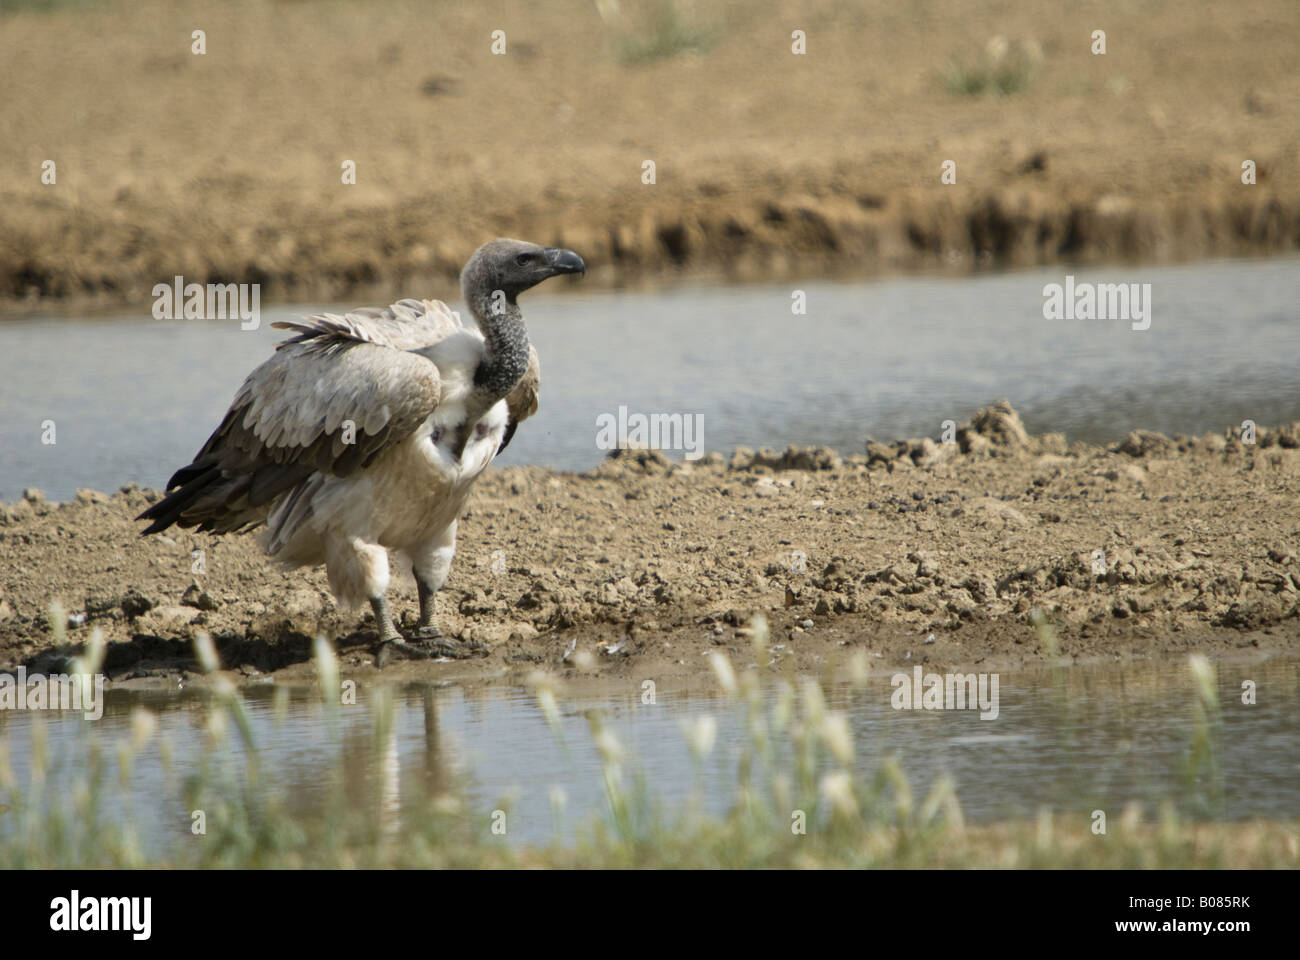 A cape griffon vulture standing next to a waterhole in the Kalahari Stock Photo